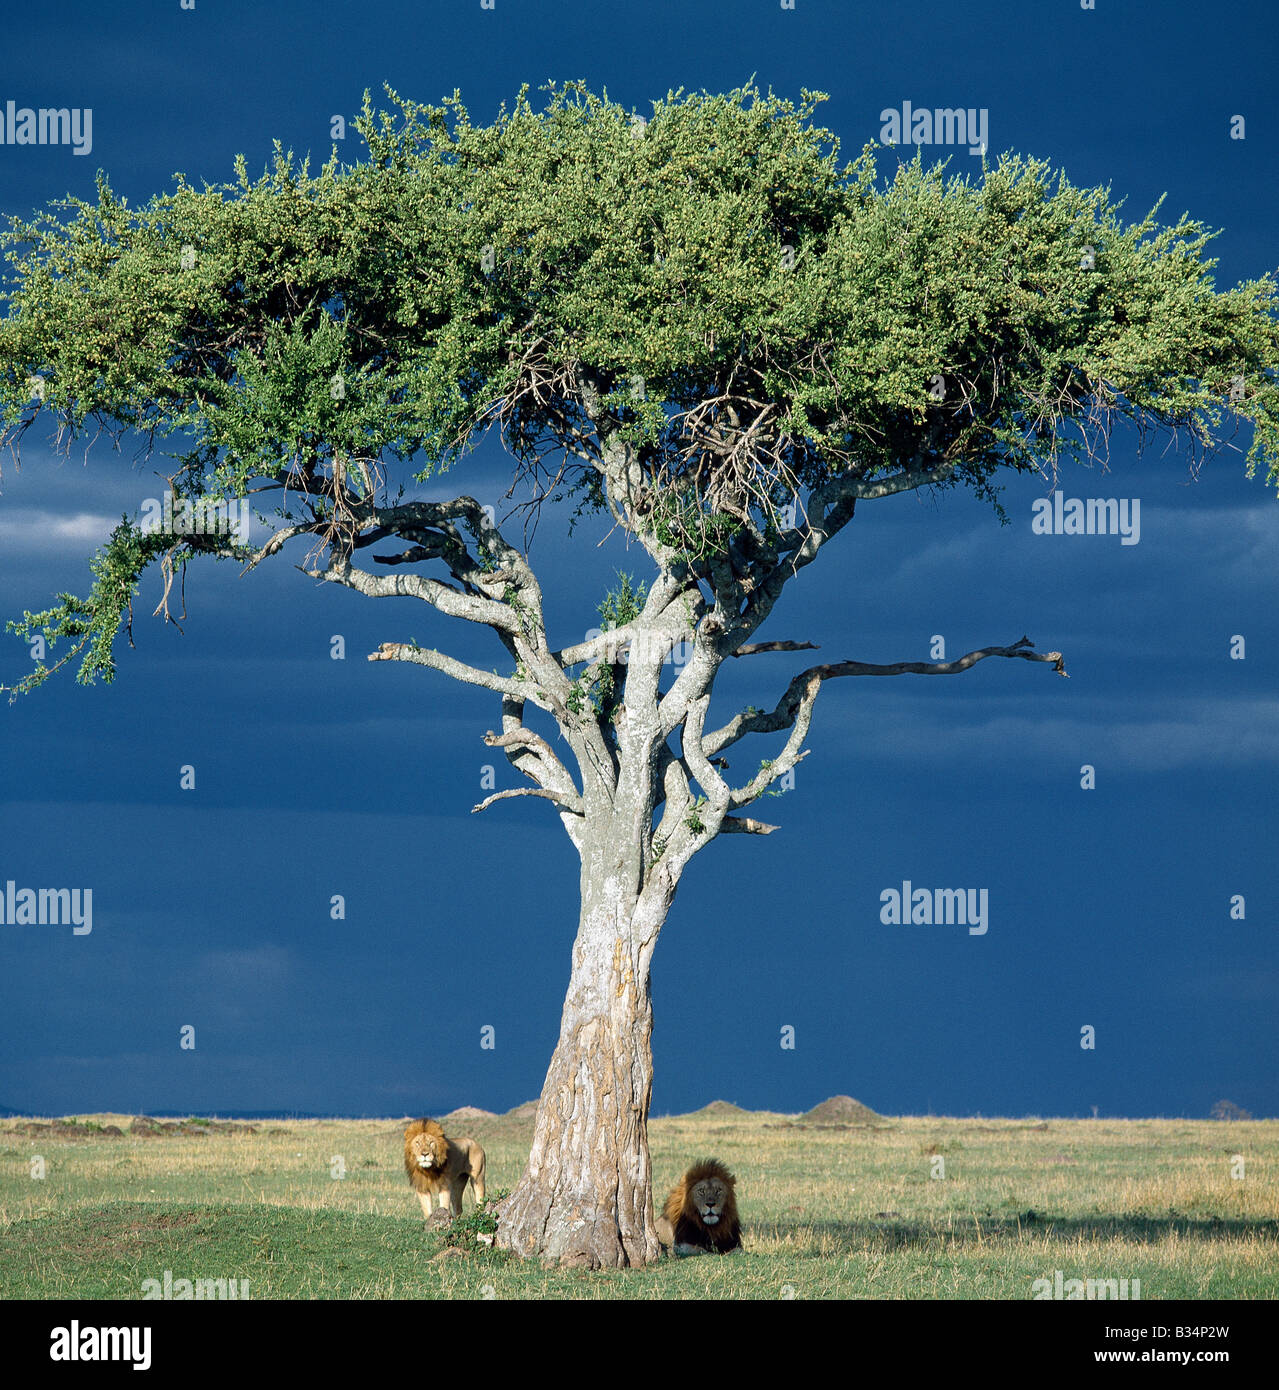 Kenya, Narok, Masai Mara. Two lions pause beside a Balanites  tree in Masai Mara as rain threatens. Stock Photo